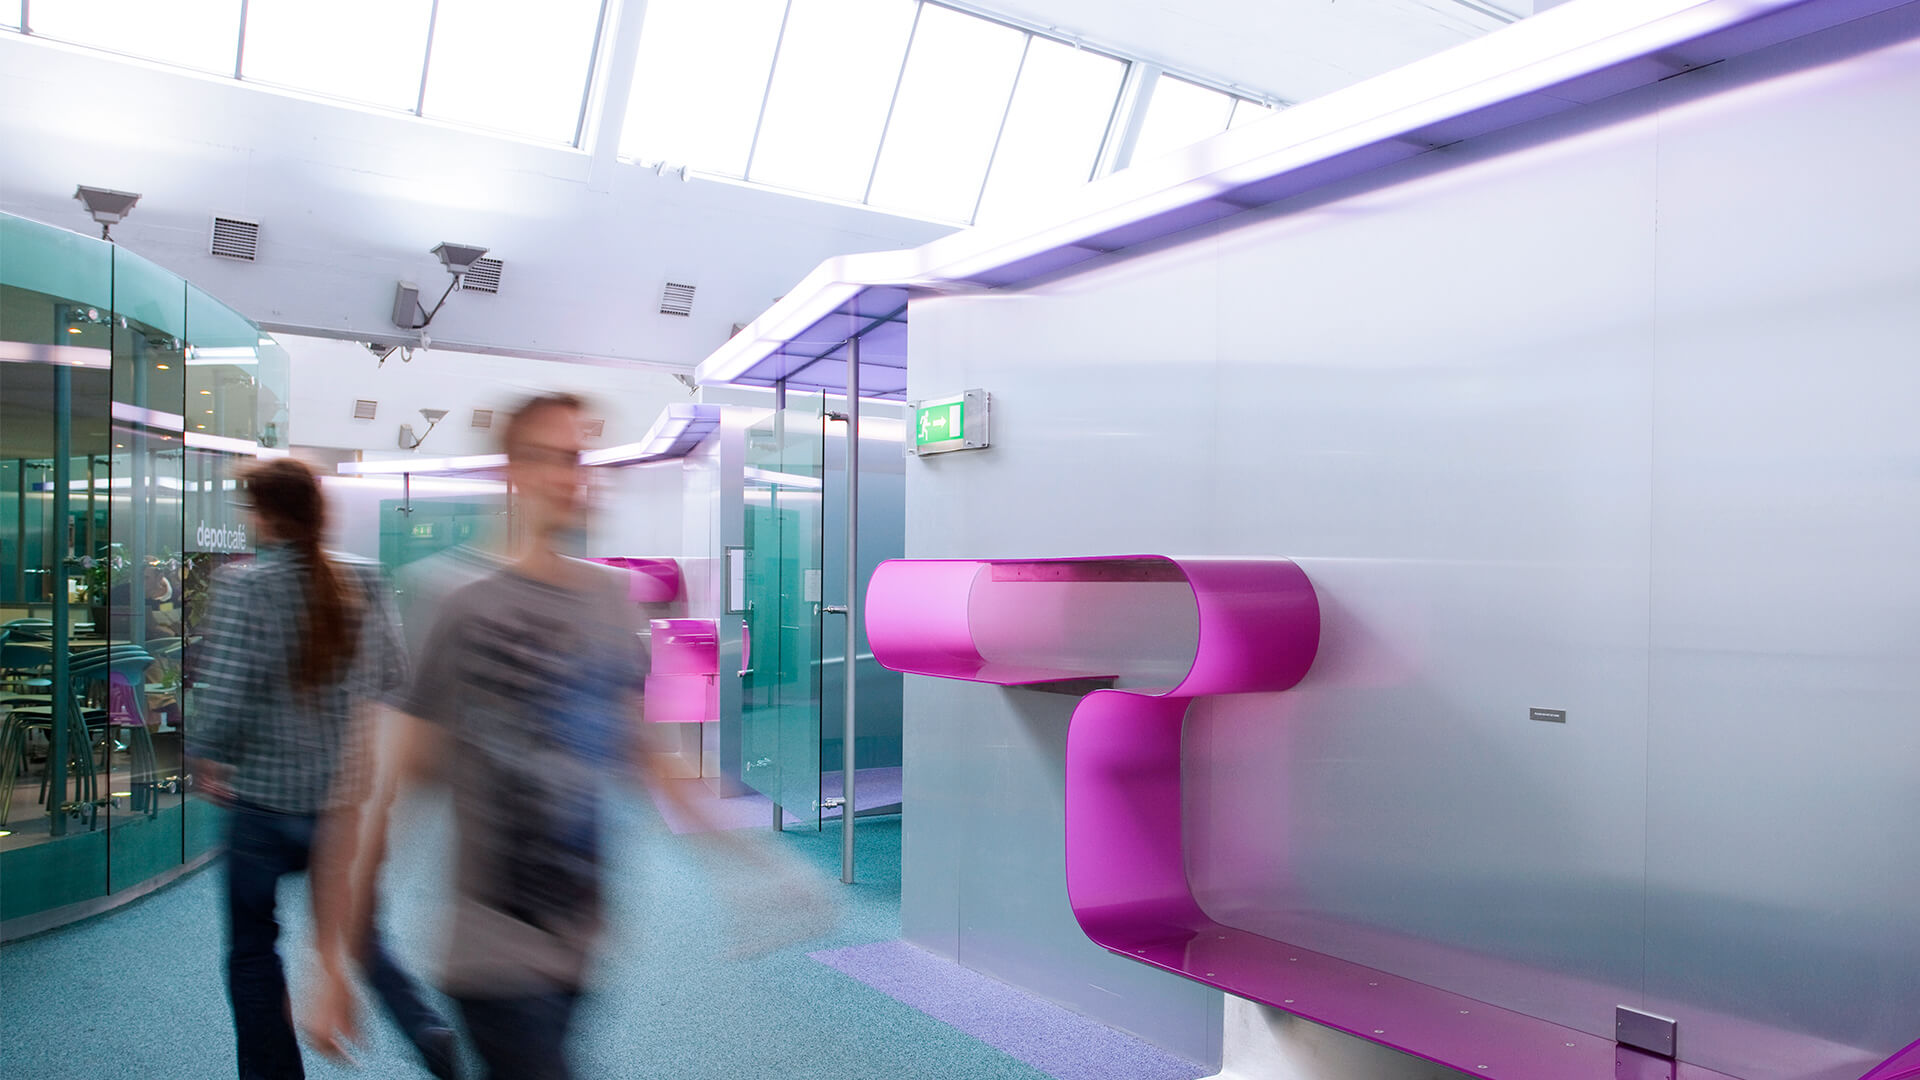 People in blurred motion walk through the modern, light-filled Digital Depot building